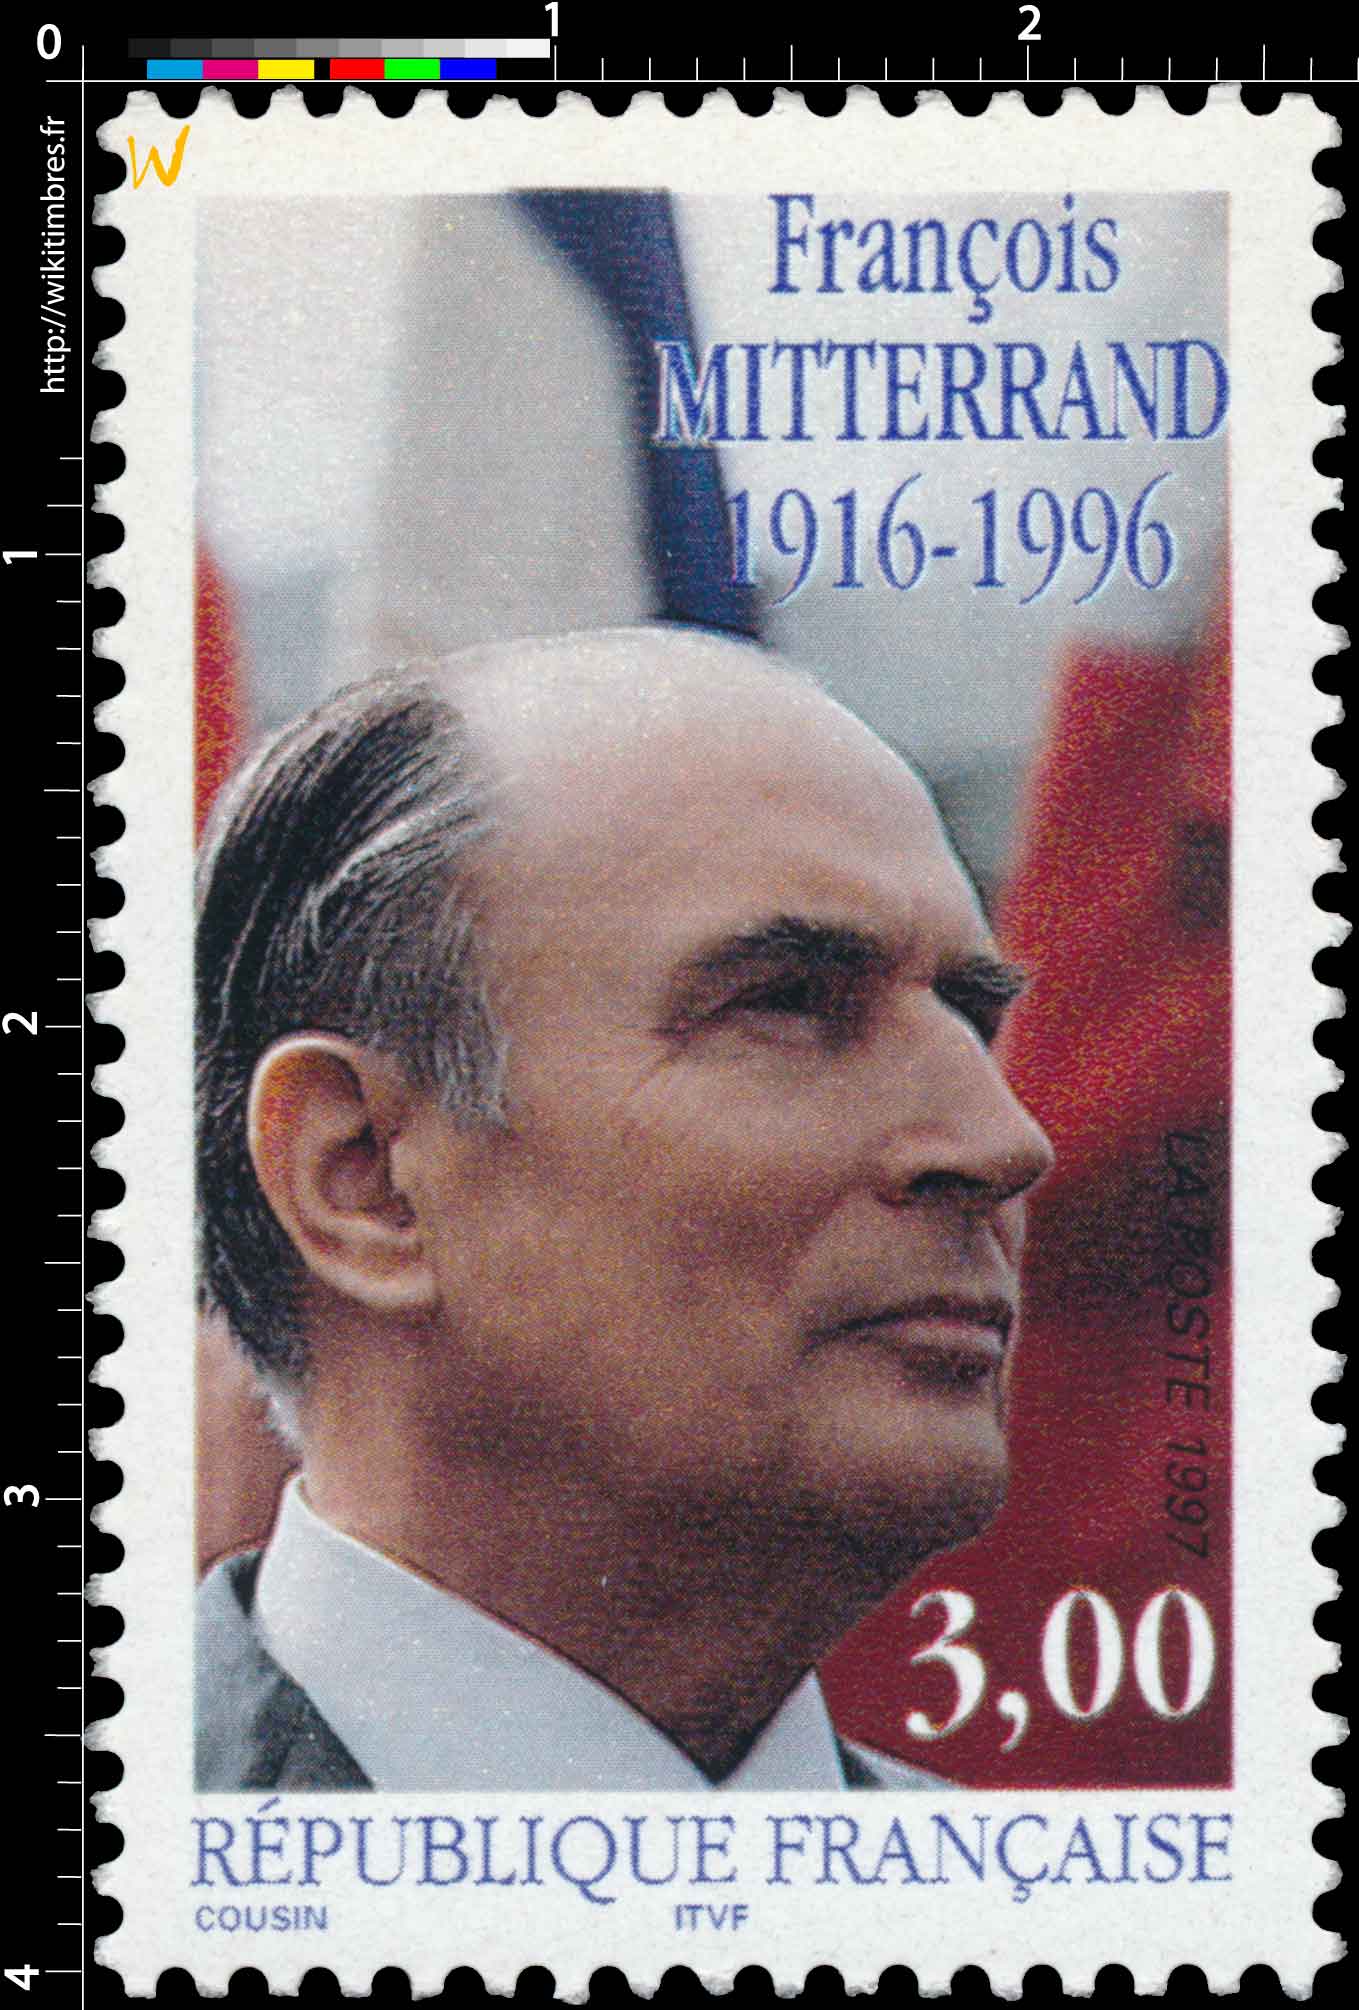 1997 FRANÇOIS MITTERRAND 1916-1996